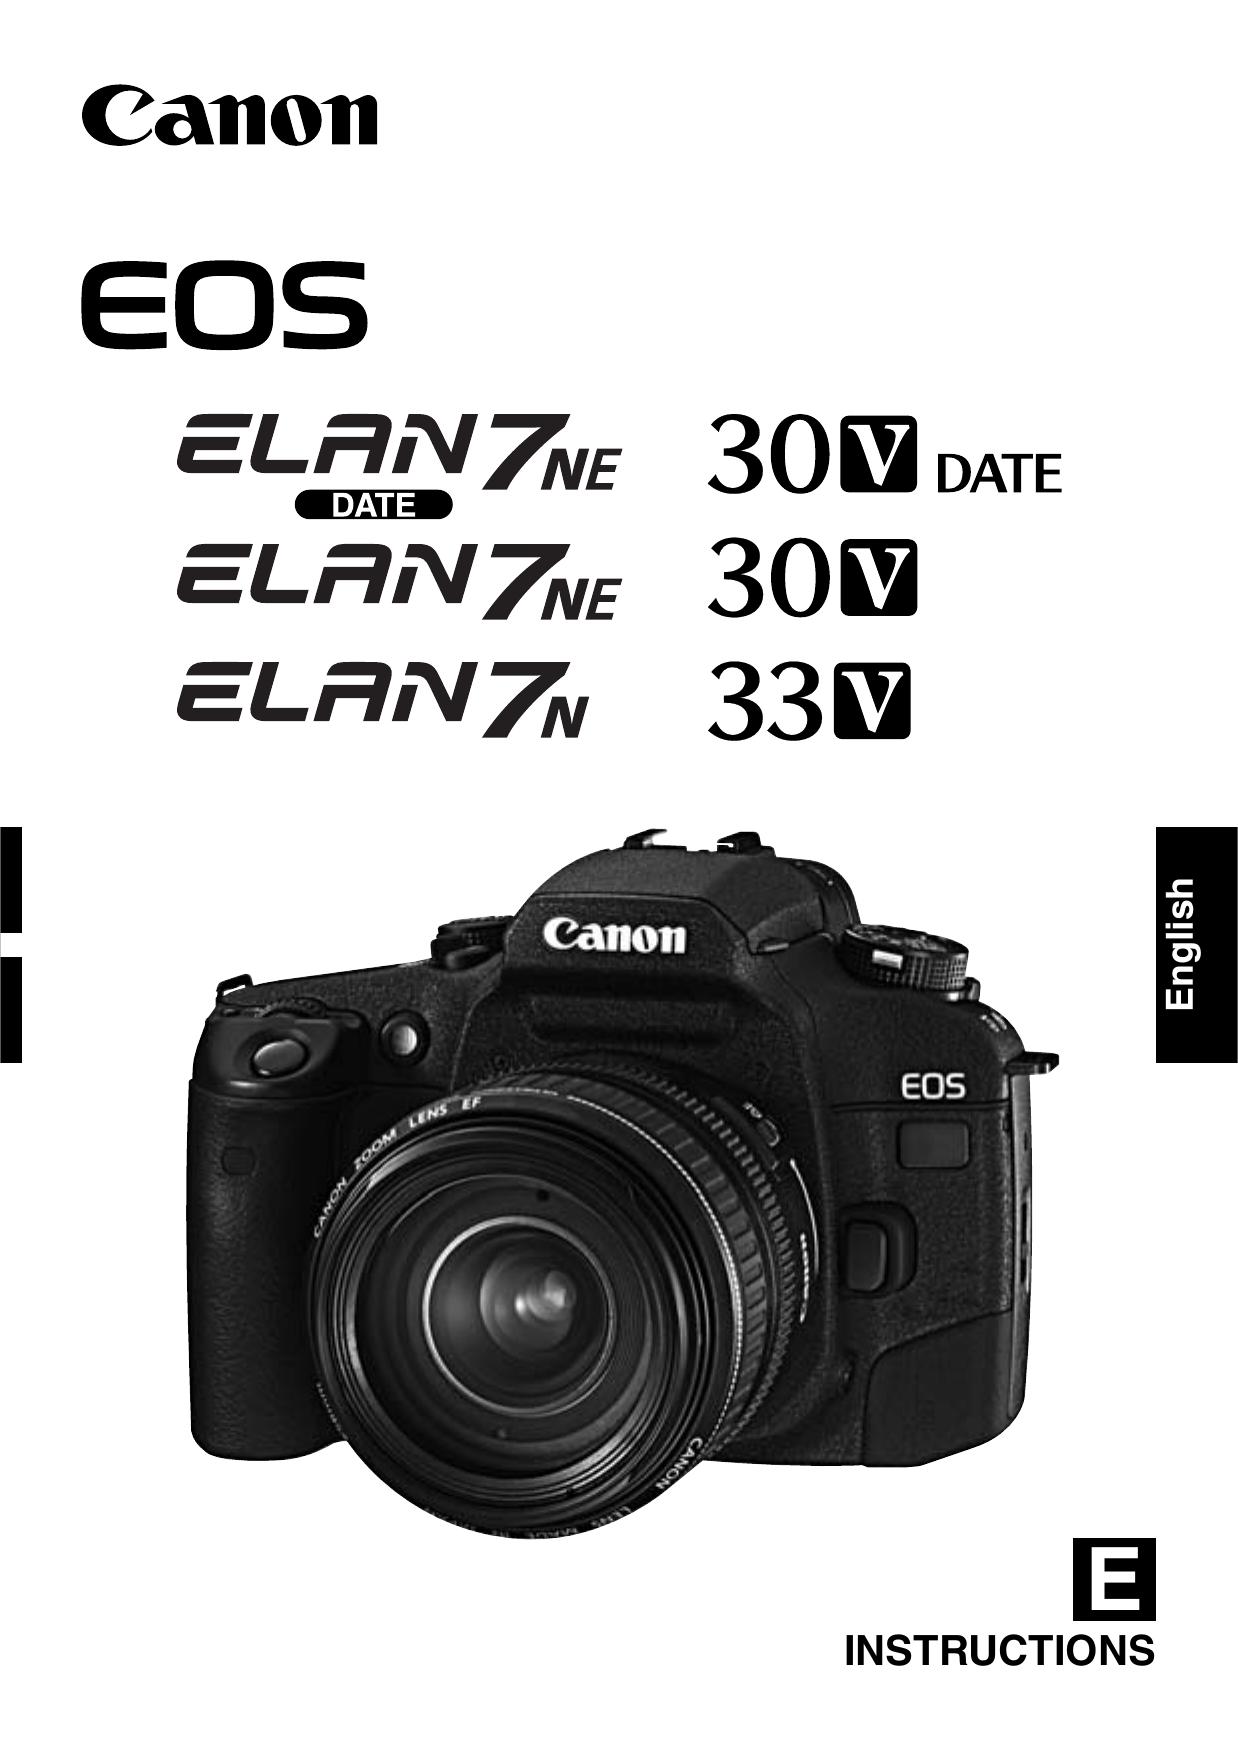 Canon ELAN7NE-33V Film Camera User Manual